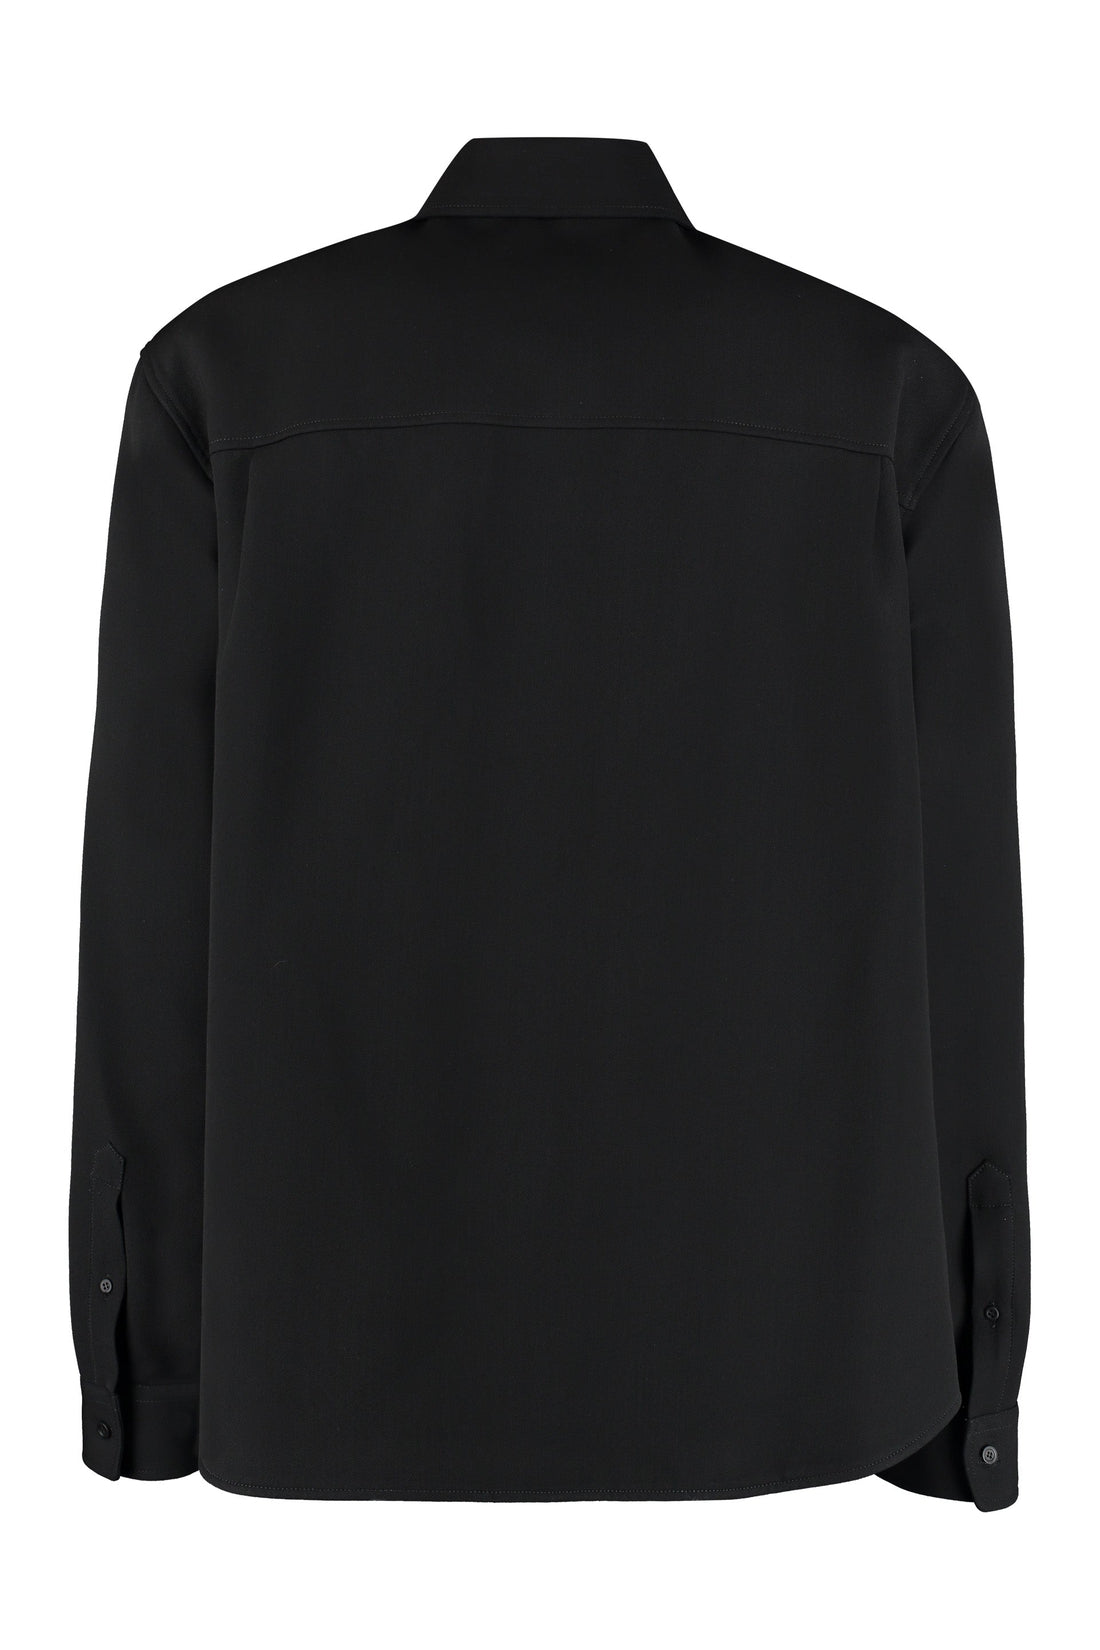 Balenciaga-OUTLET-SALE-Virgin wool overshirt-ARCHIVIST